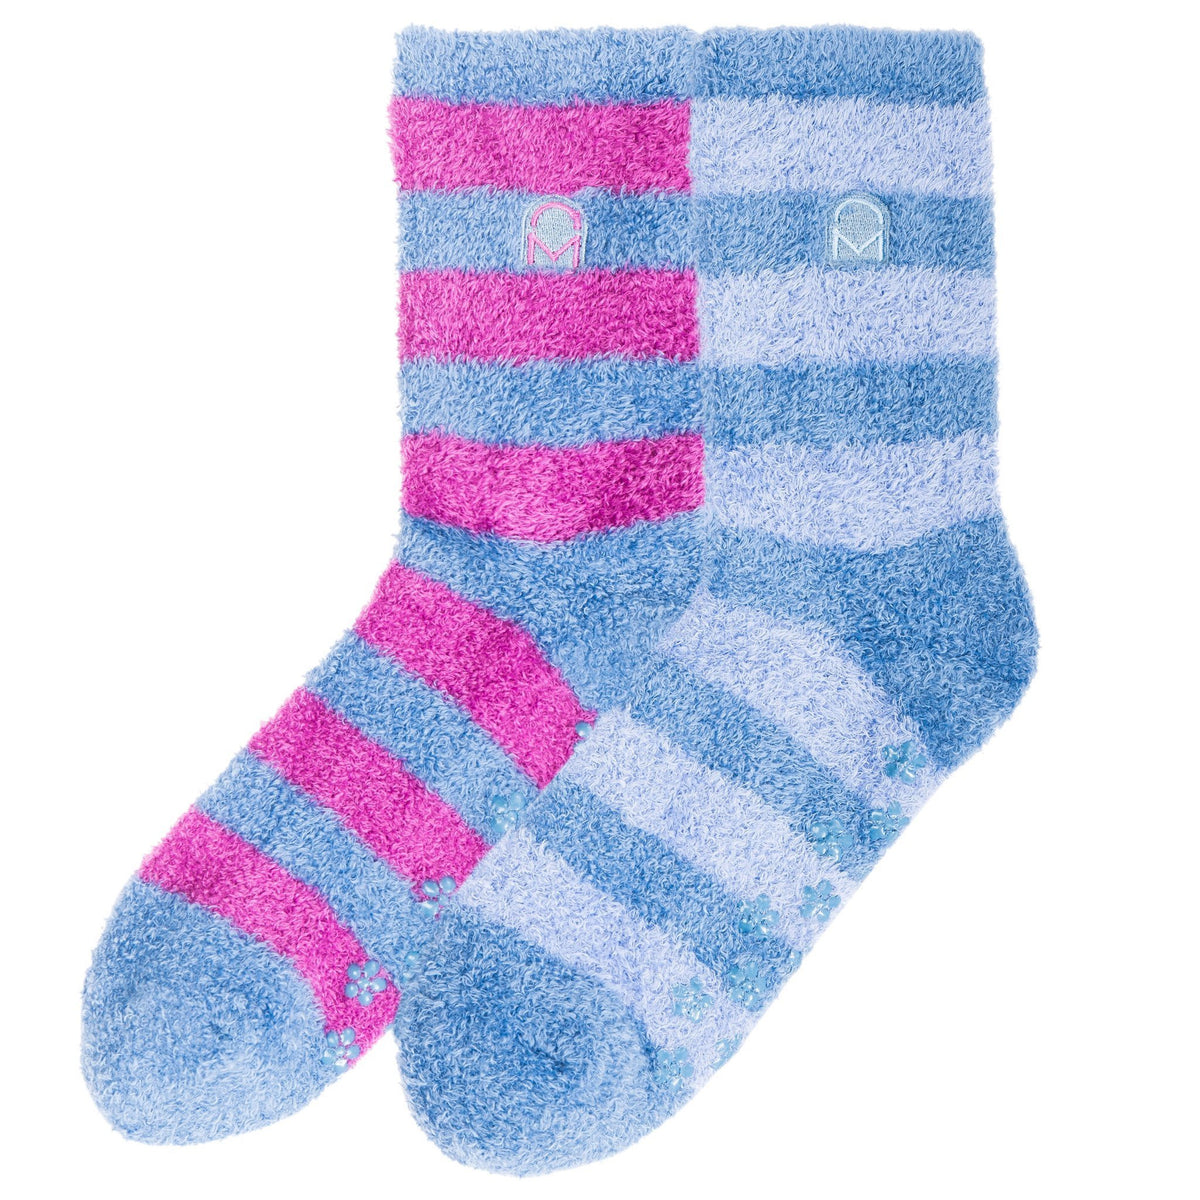 Box Packaged Women's Soft Anti-Skid Winter Feather Socks - 2-Pairs - Set C7